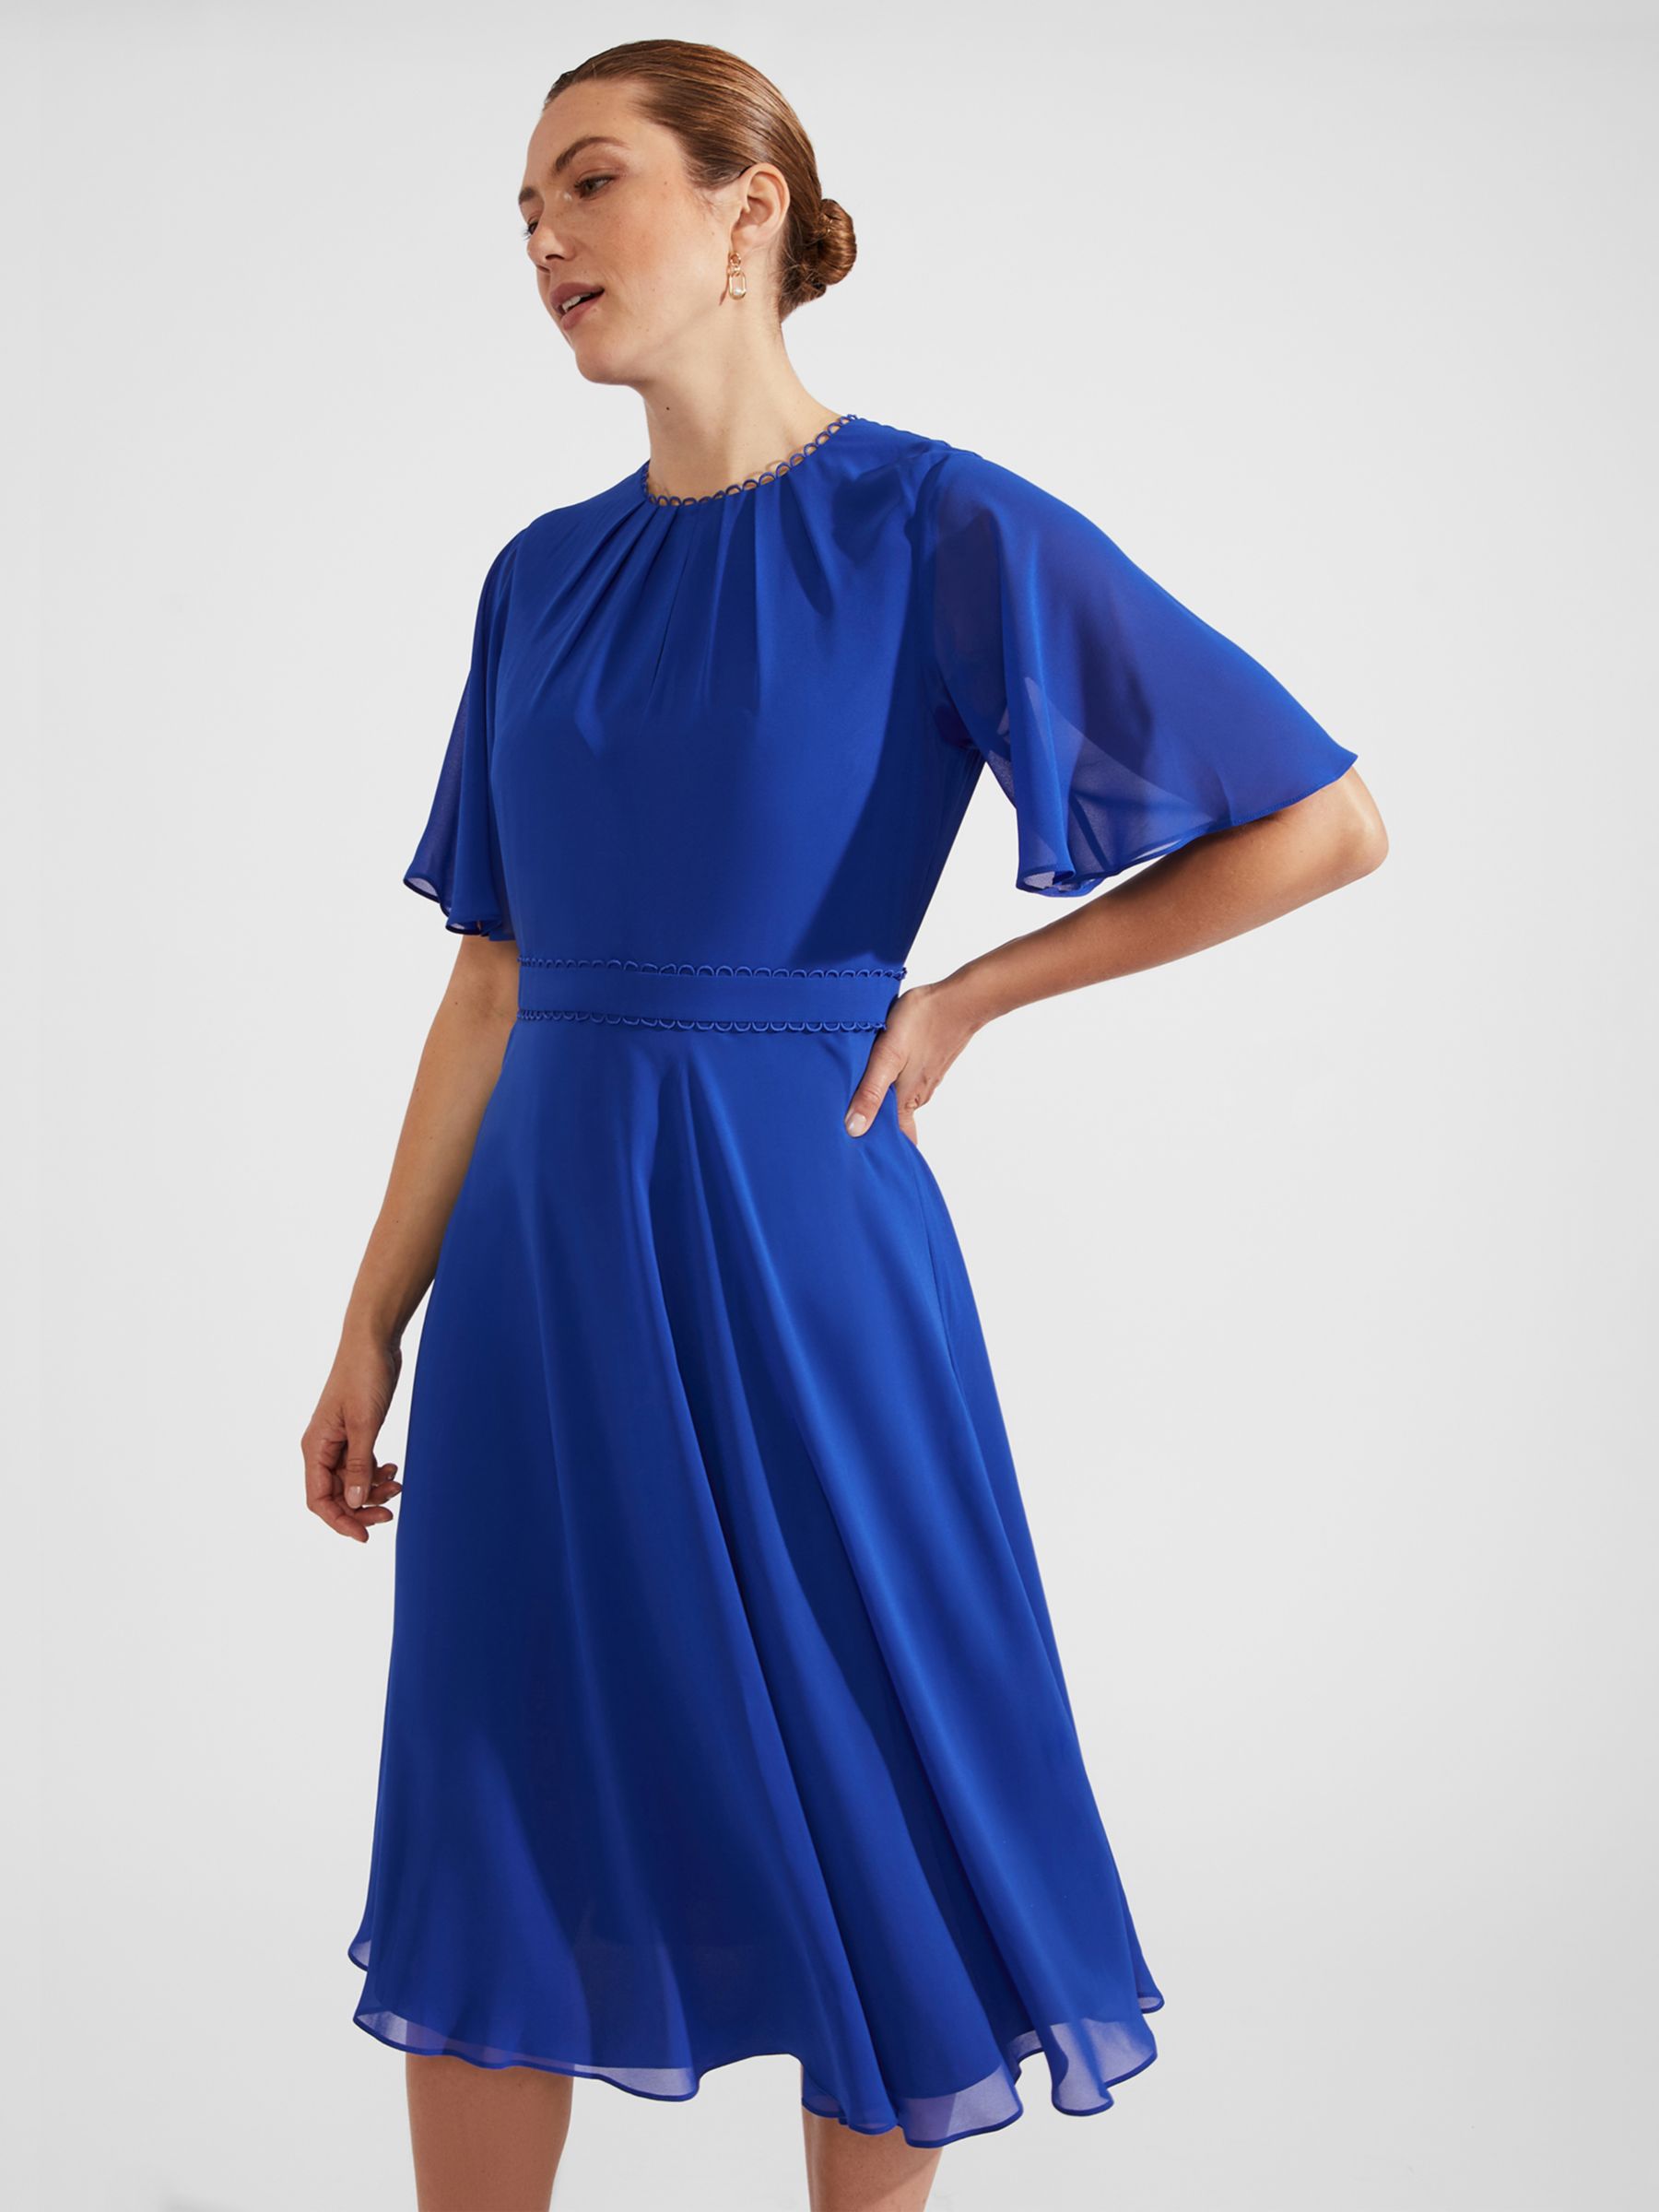 Hobbs Petite Samara Dress, Lapis Blue at John Lewis & Partners